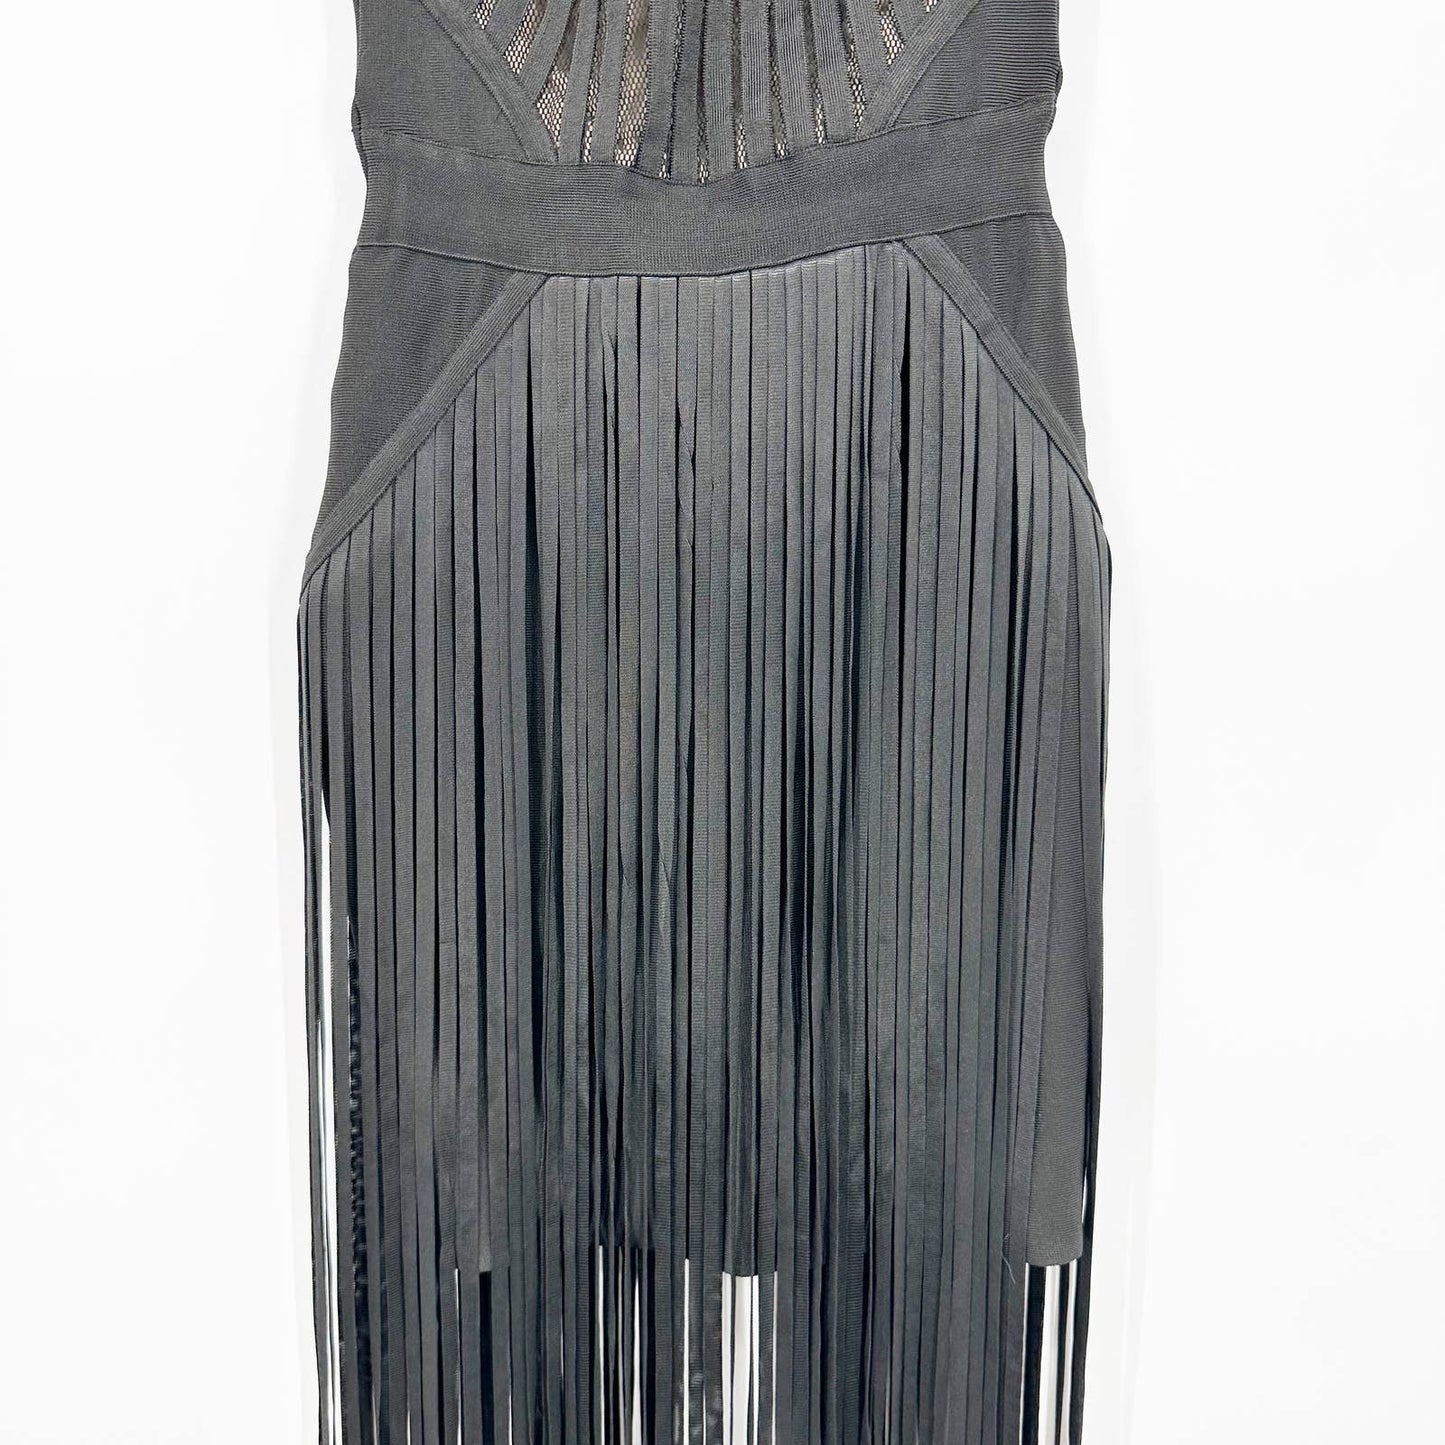 Gold Label Wow Couture Bandage Bodycon Fringe Hem Maxi Dress Black Small